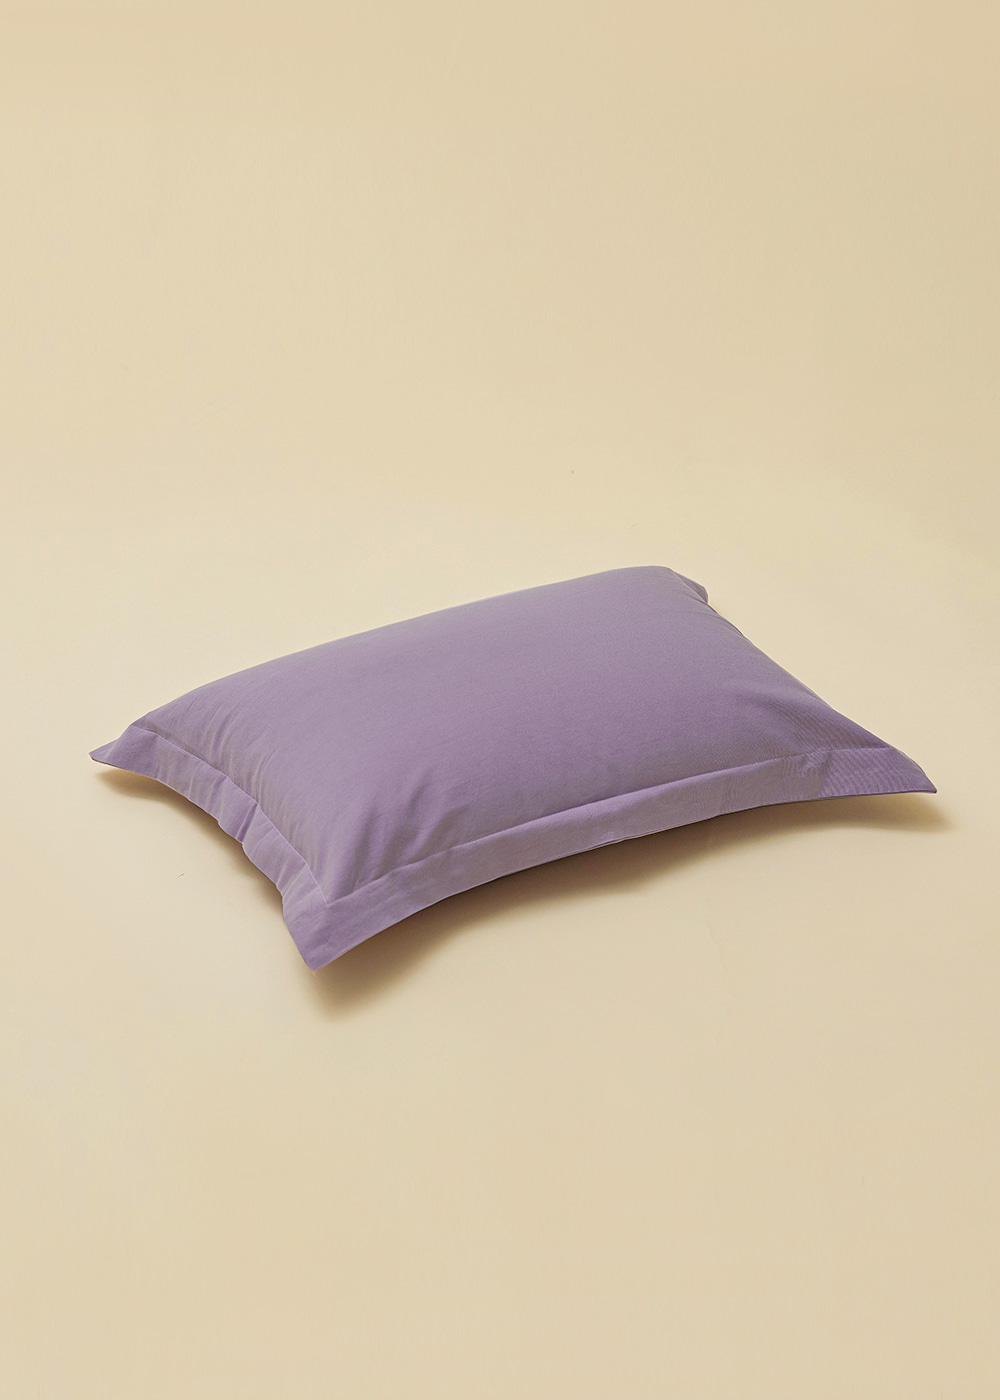 rainbow pillow cover : purple